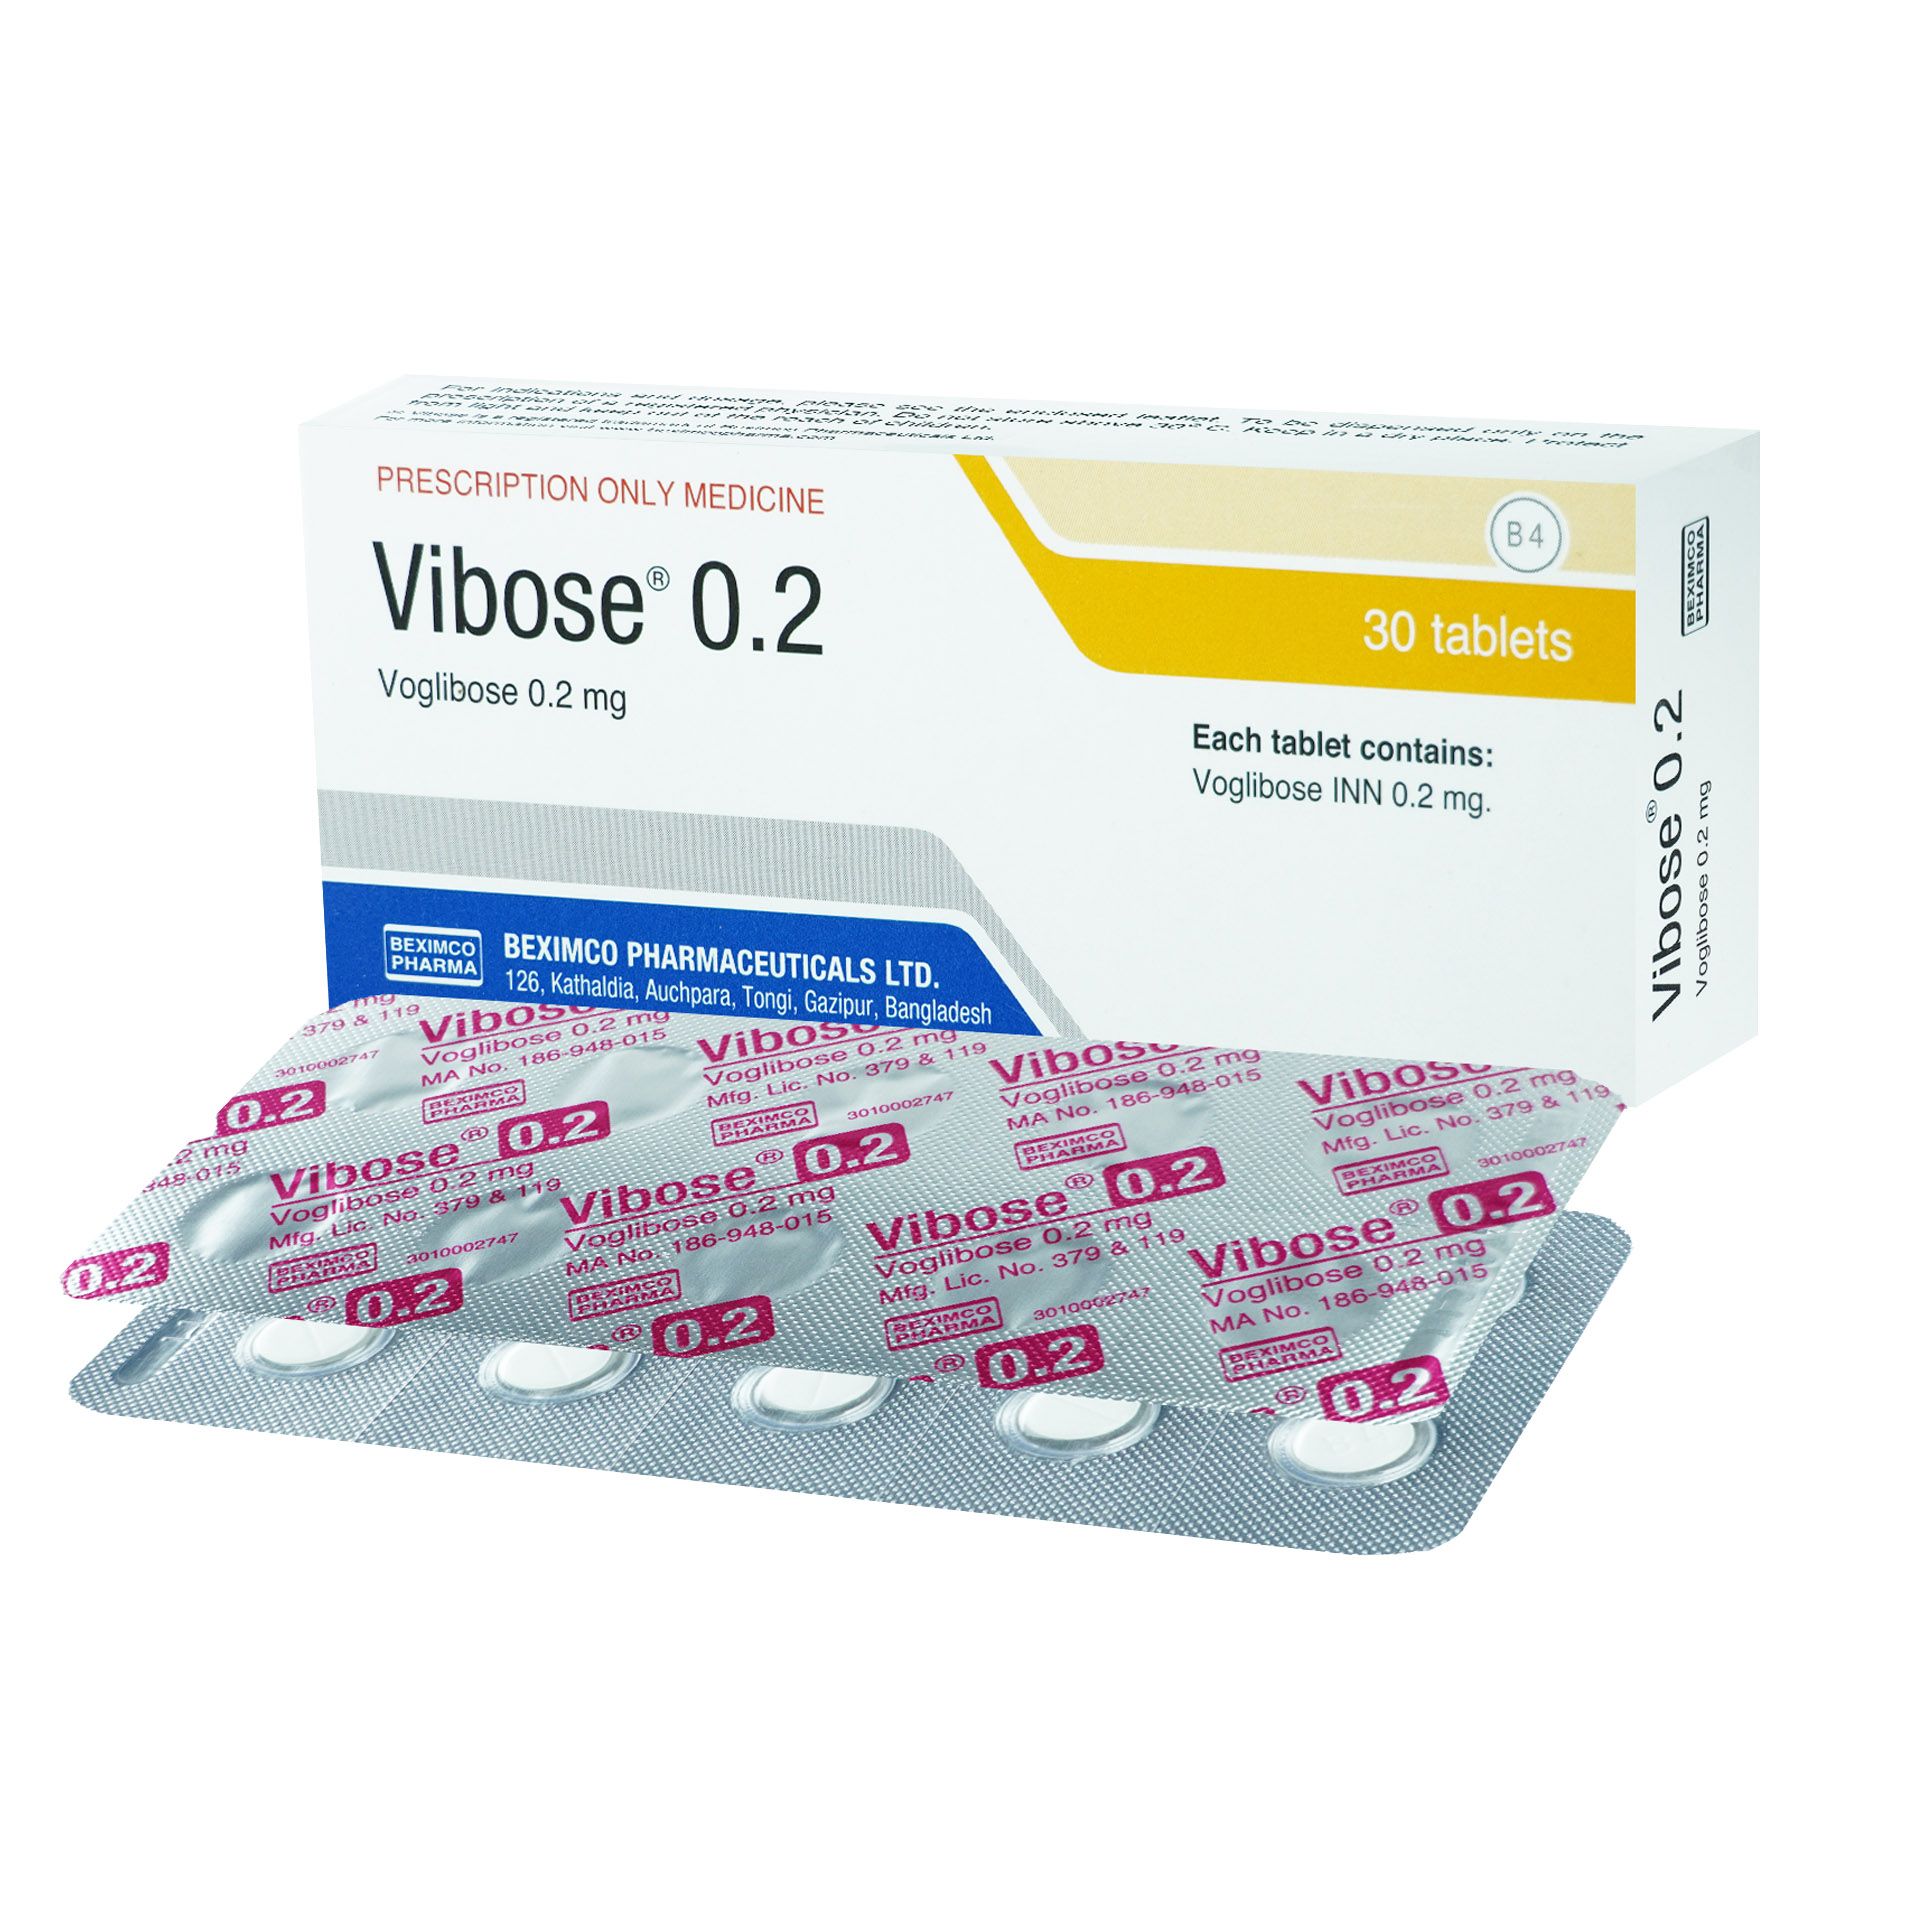 Vibose 0.2 200mcg Tablet